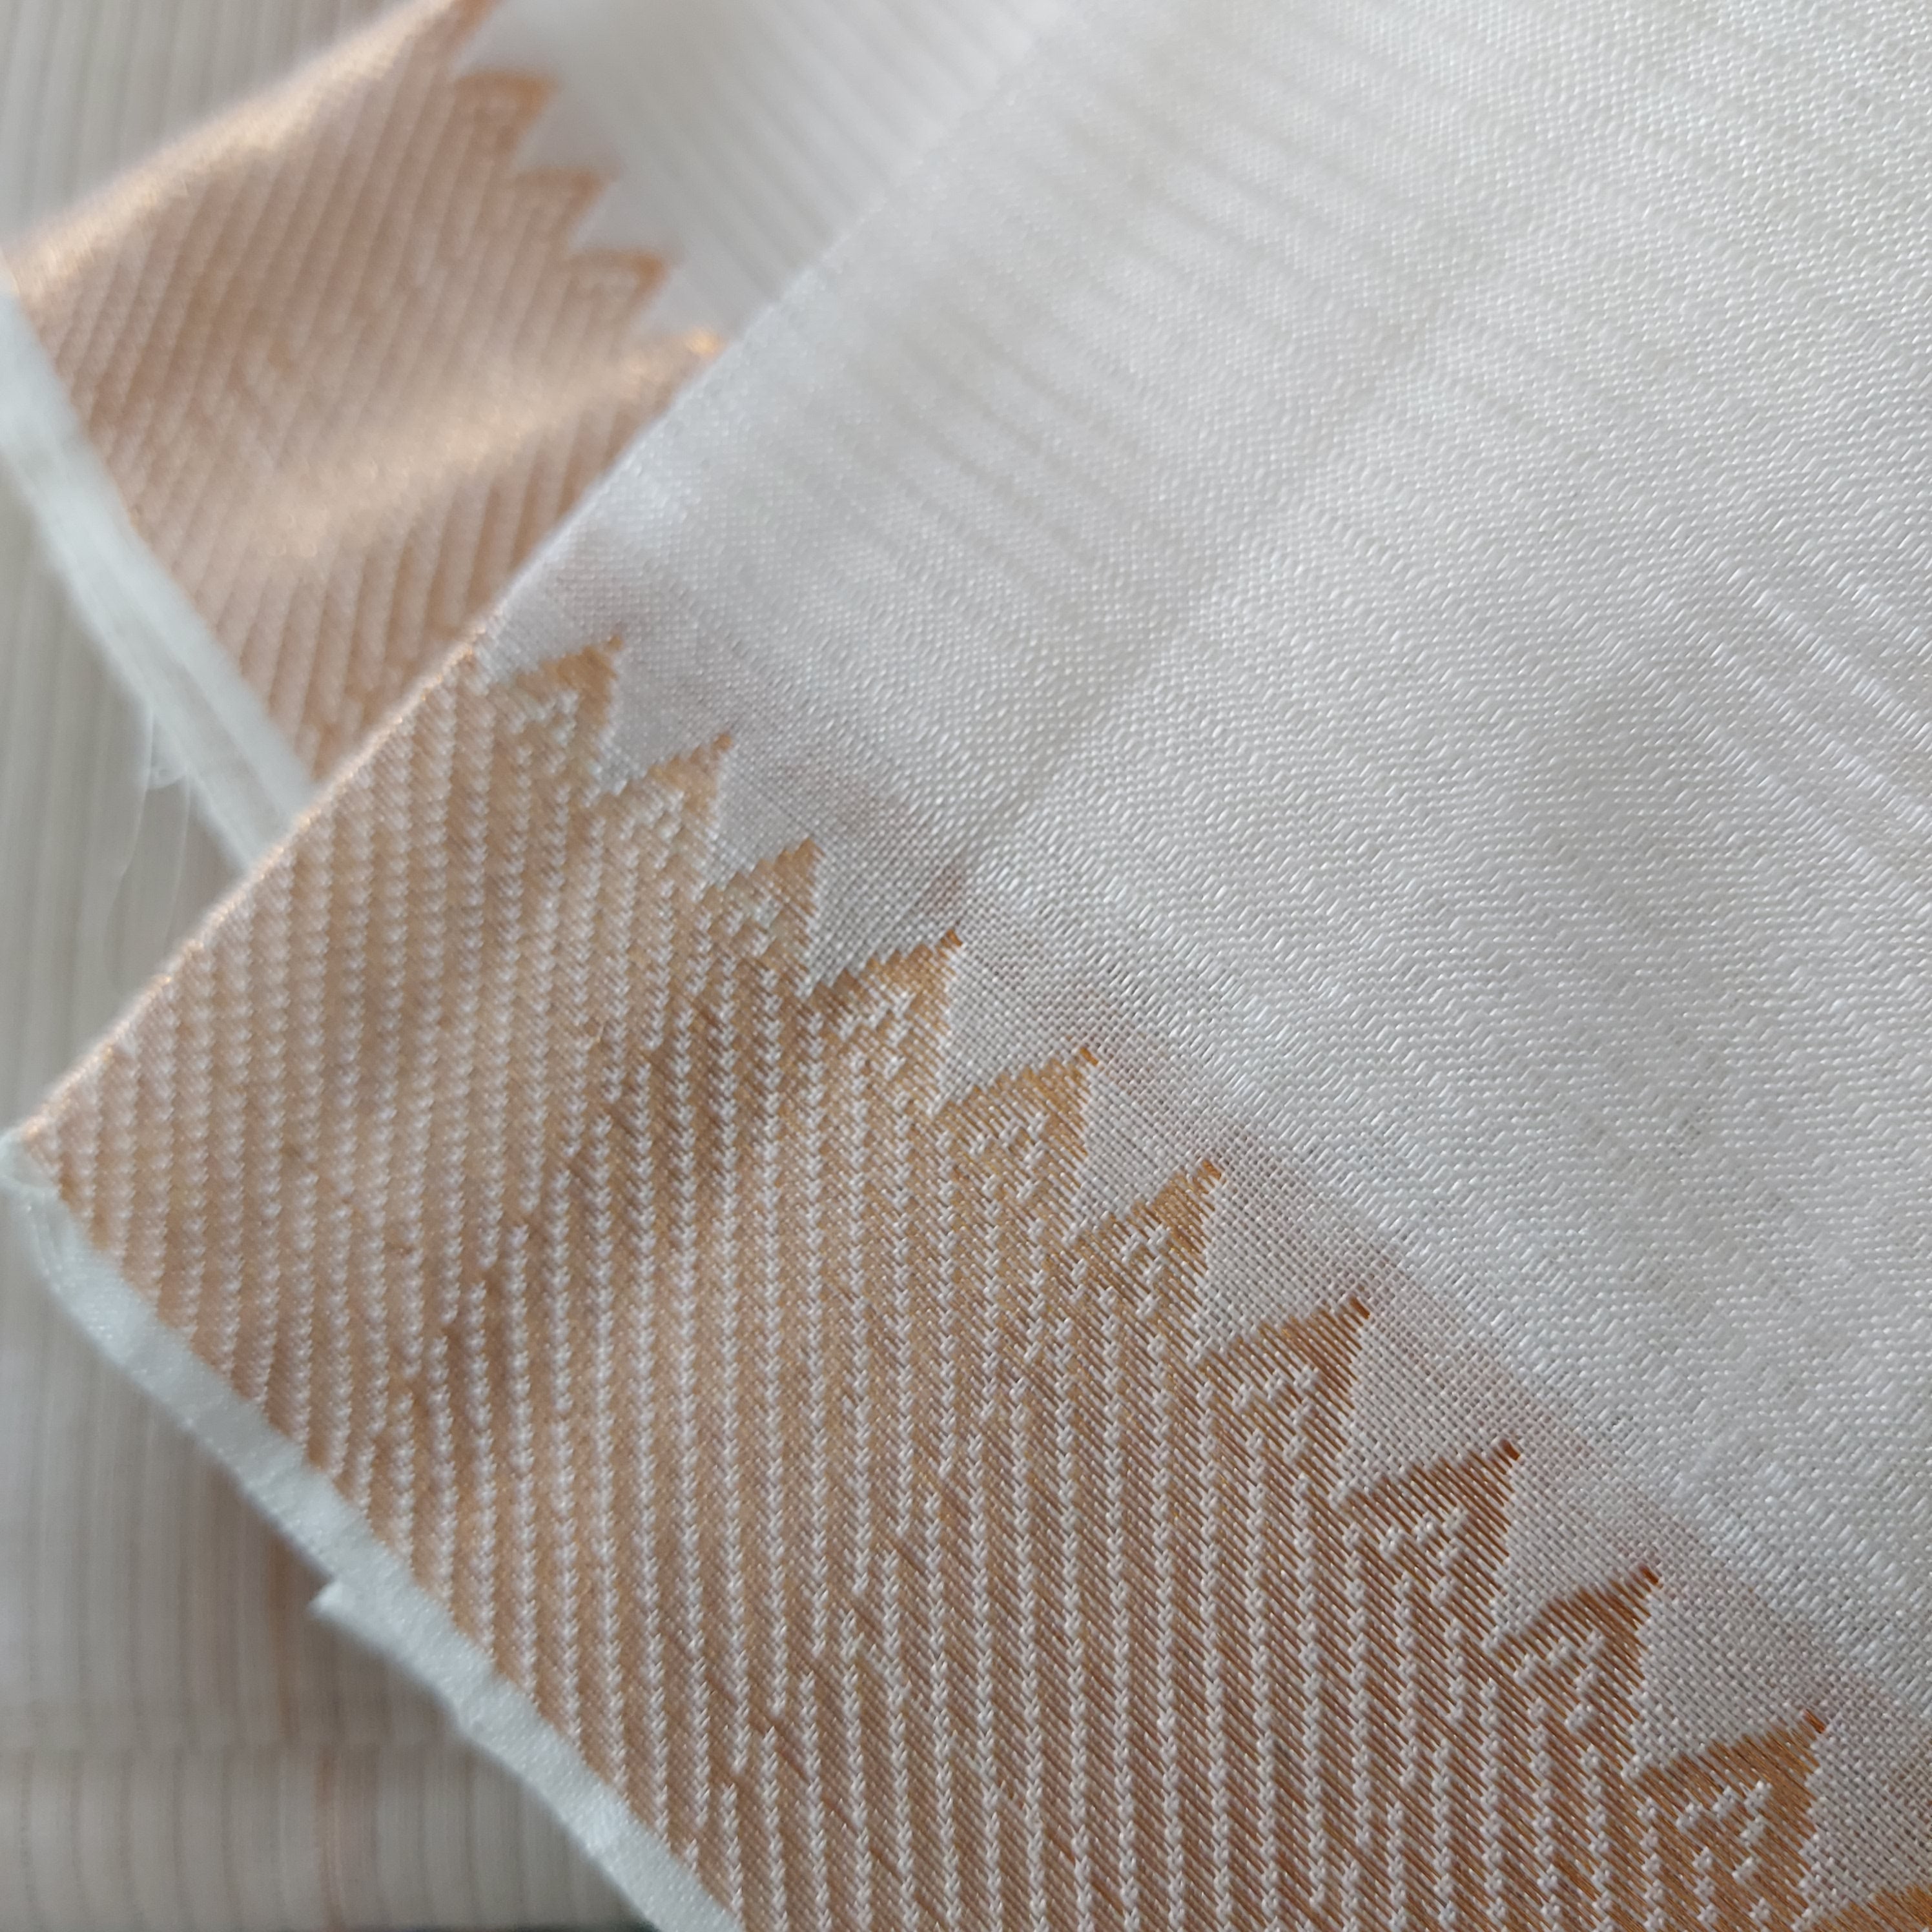 Mangalagiri Silk Cotton Saree With Gold Zari Checks - Off White